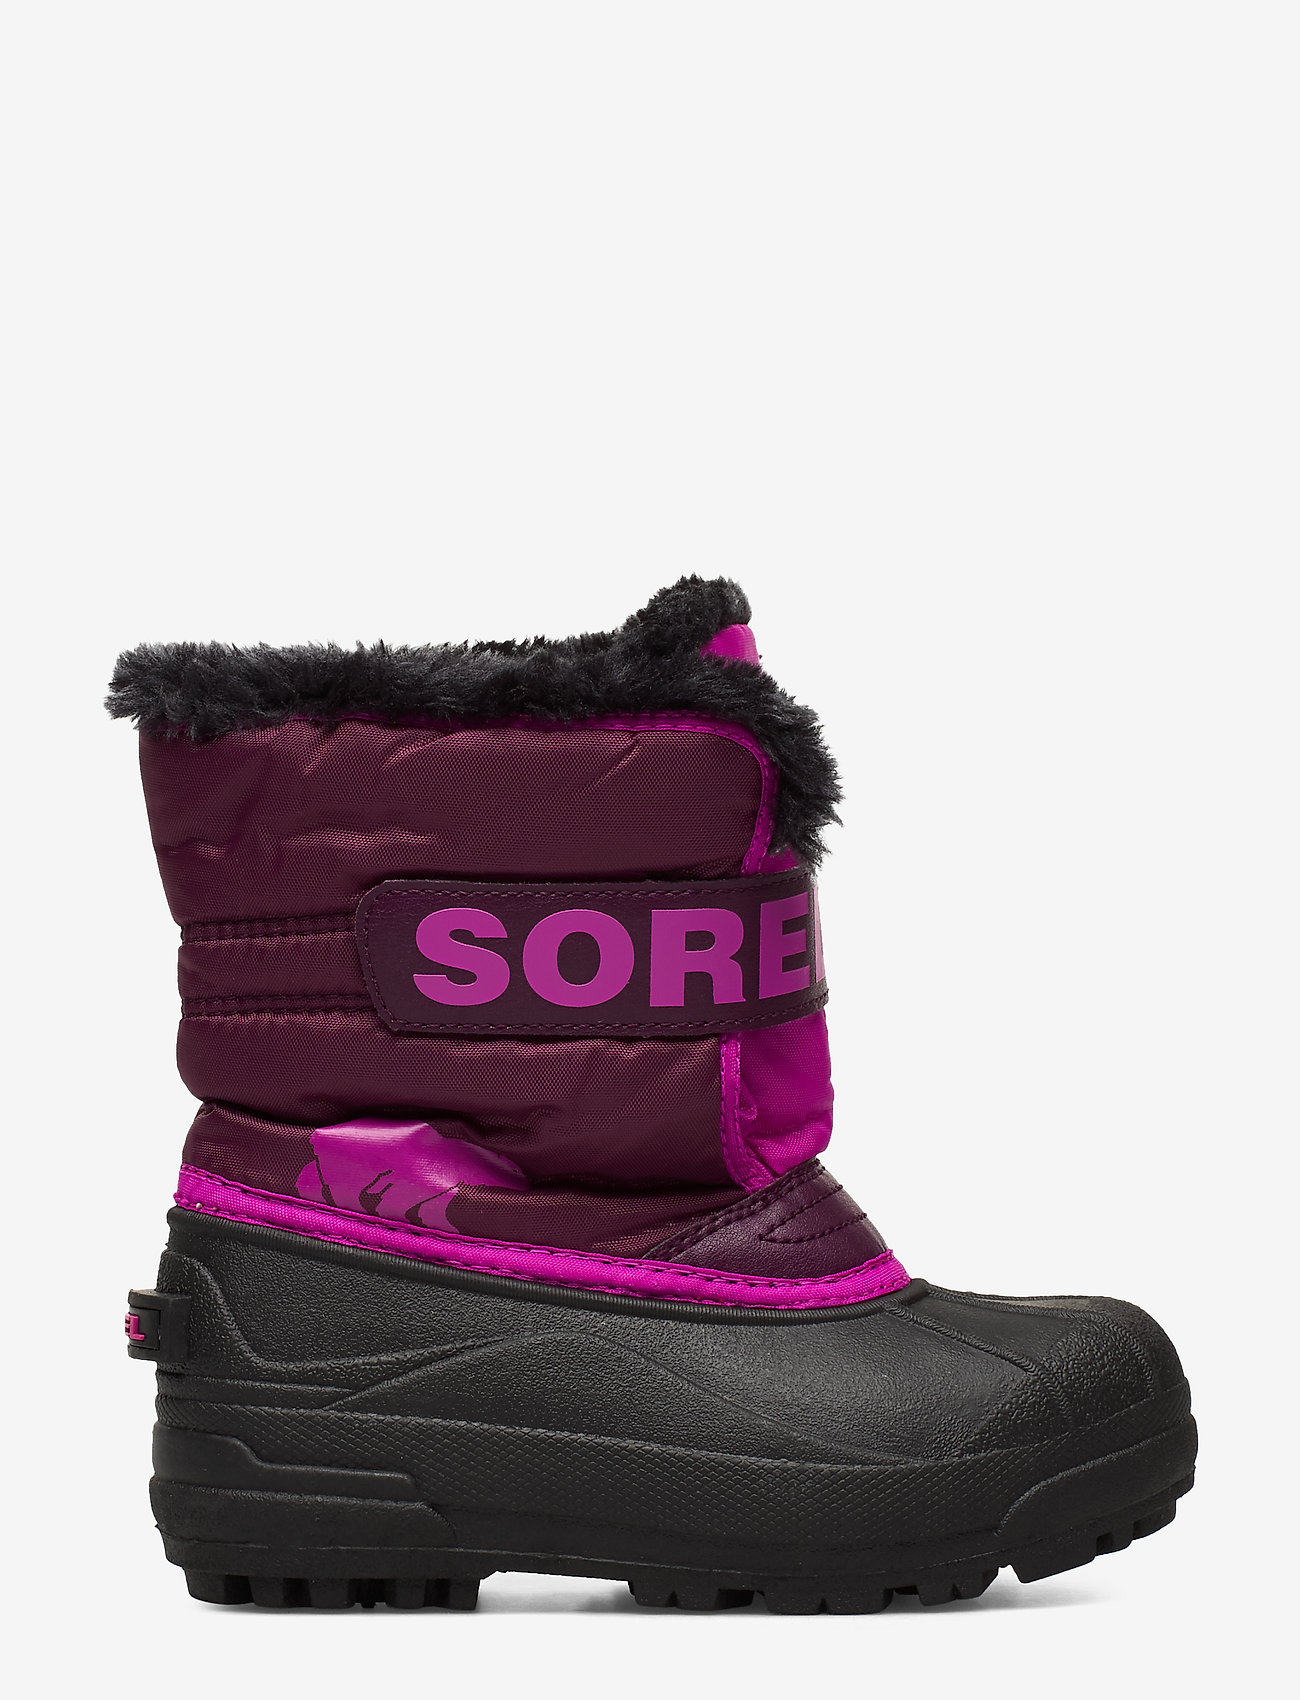 Sorel - CHILDRENS SNOW COMMANDER - kinder - purple dahlia, groovy pink - 1